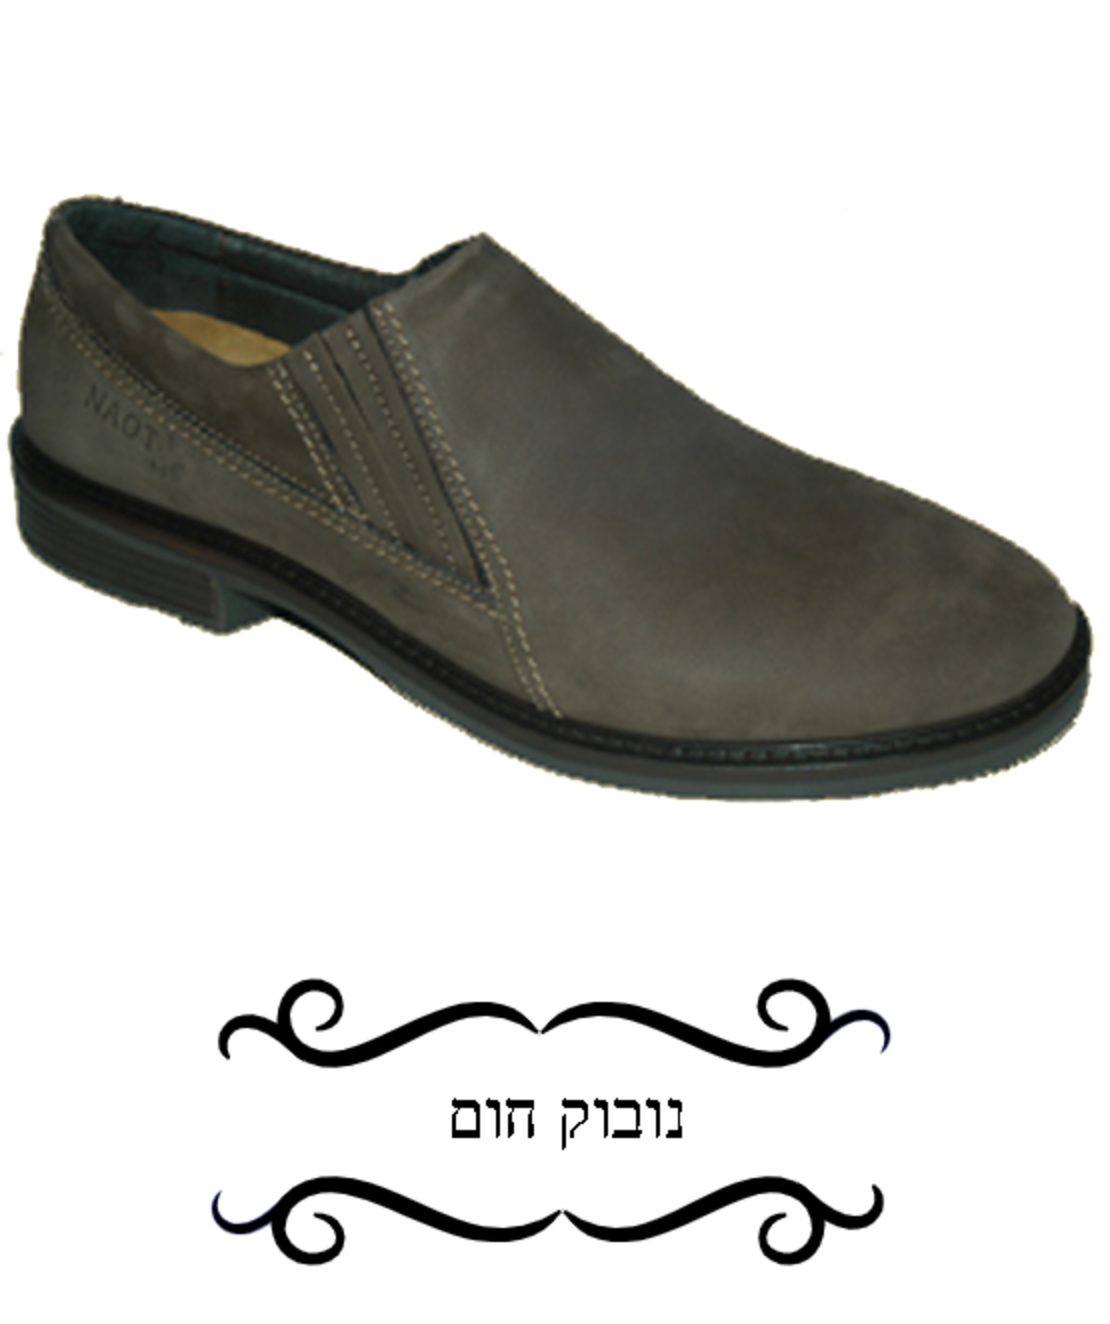 Baron - Teva Naot Shoes - Men